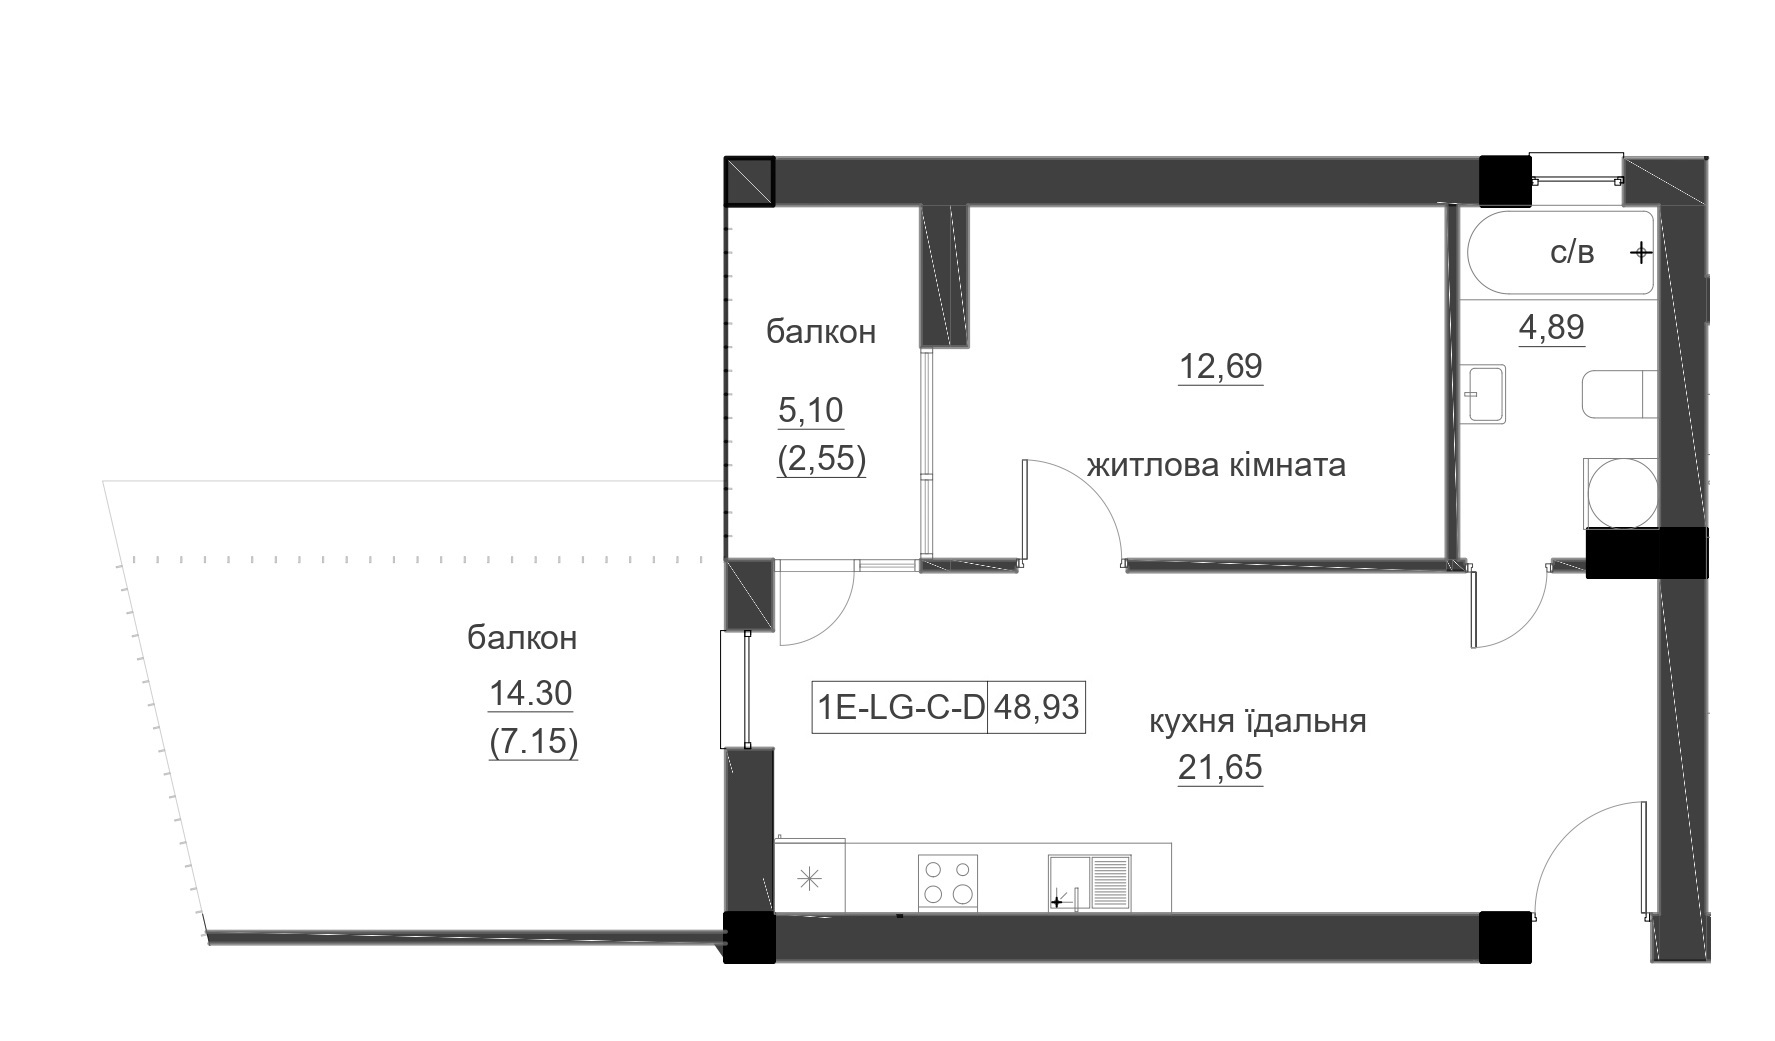 Planning 1-rm flats area 48.93m2, LR-005-03/0002.